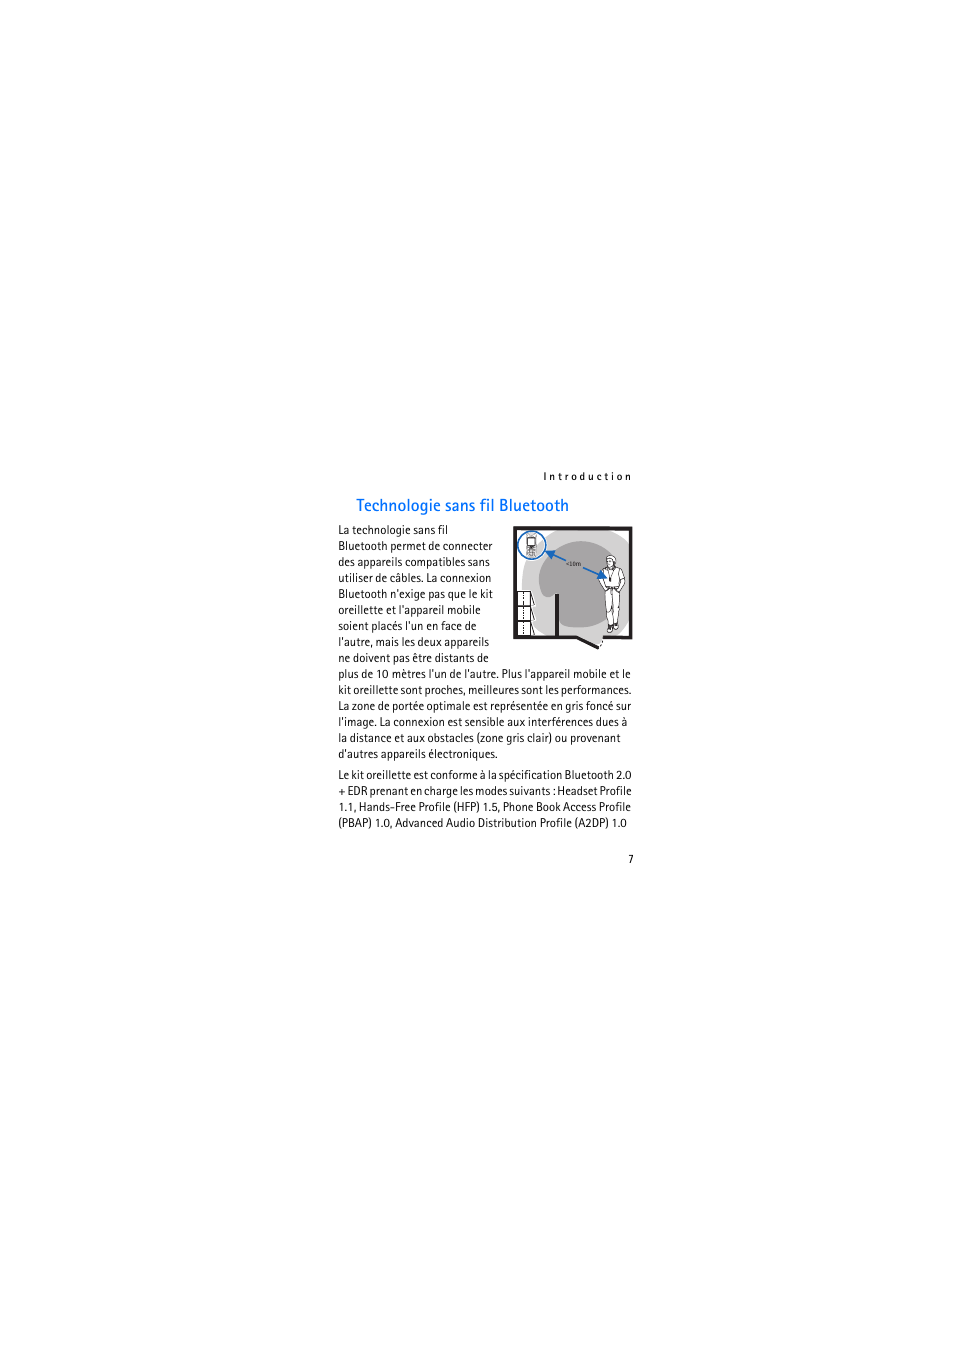 Technologie sans fil bluetooth | Nokia Bluetooth Stereo Headset BH-903 Manuel d'utilisation | Page 7 / 45